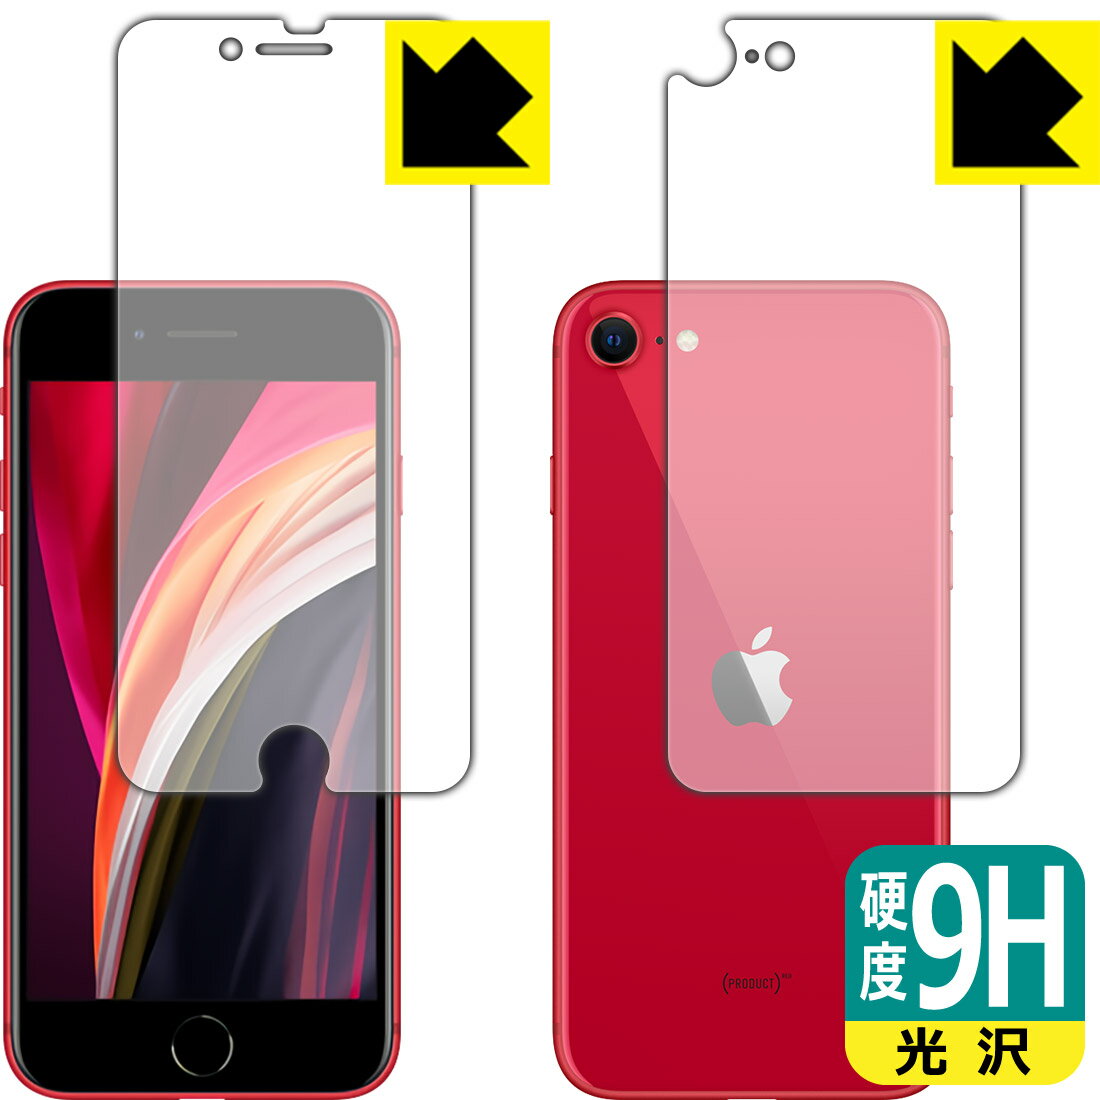 9H高硬度【光沢】保護フィルム iPhone SE (第2世代) 両面セット 【J型】 日本製 自社製造直販